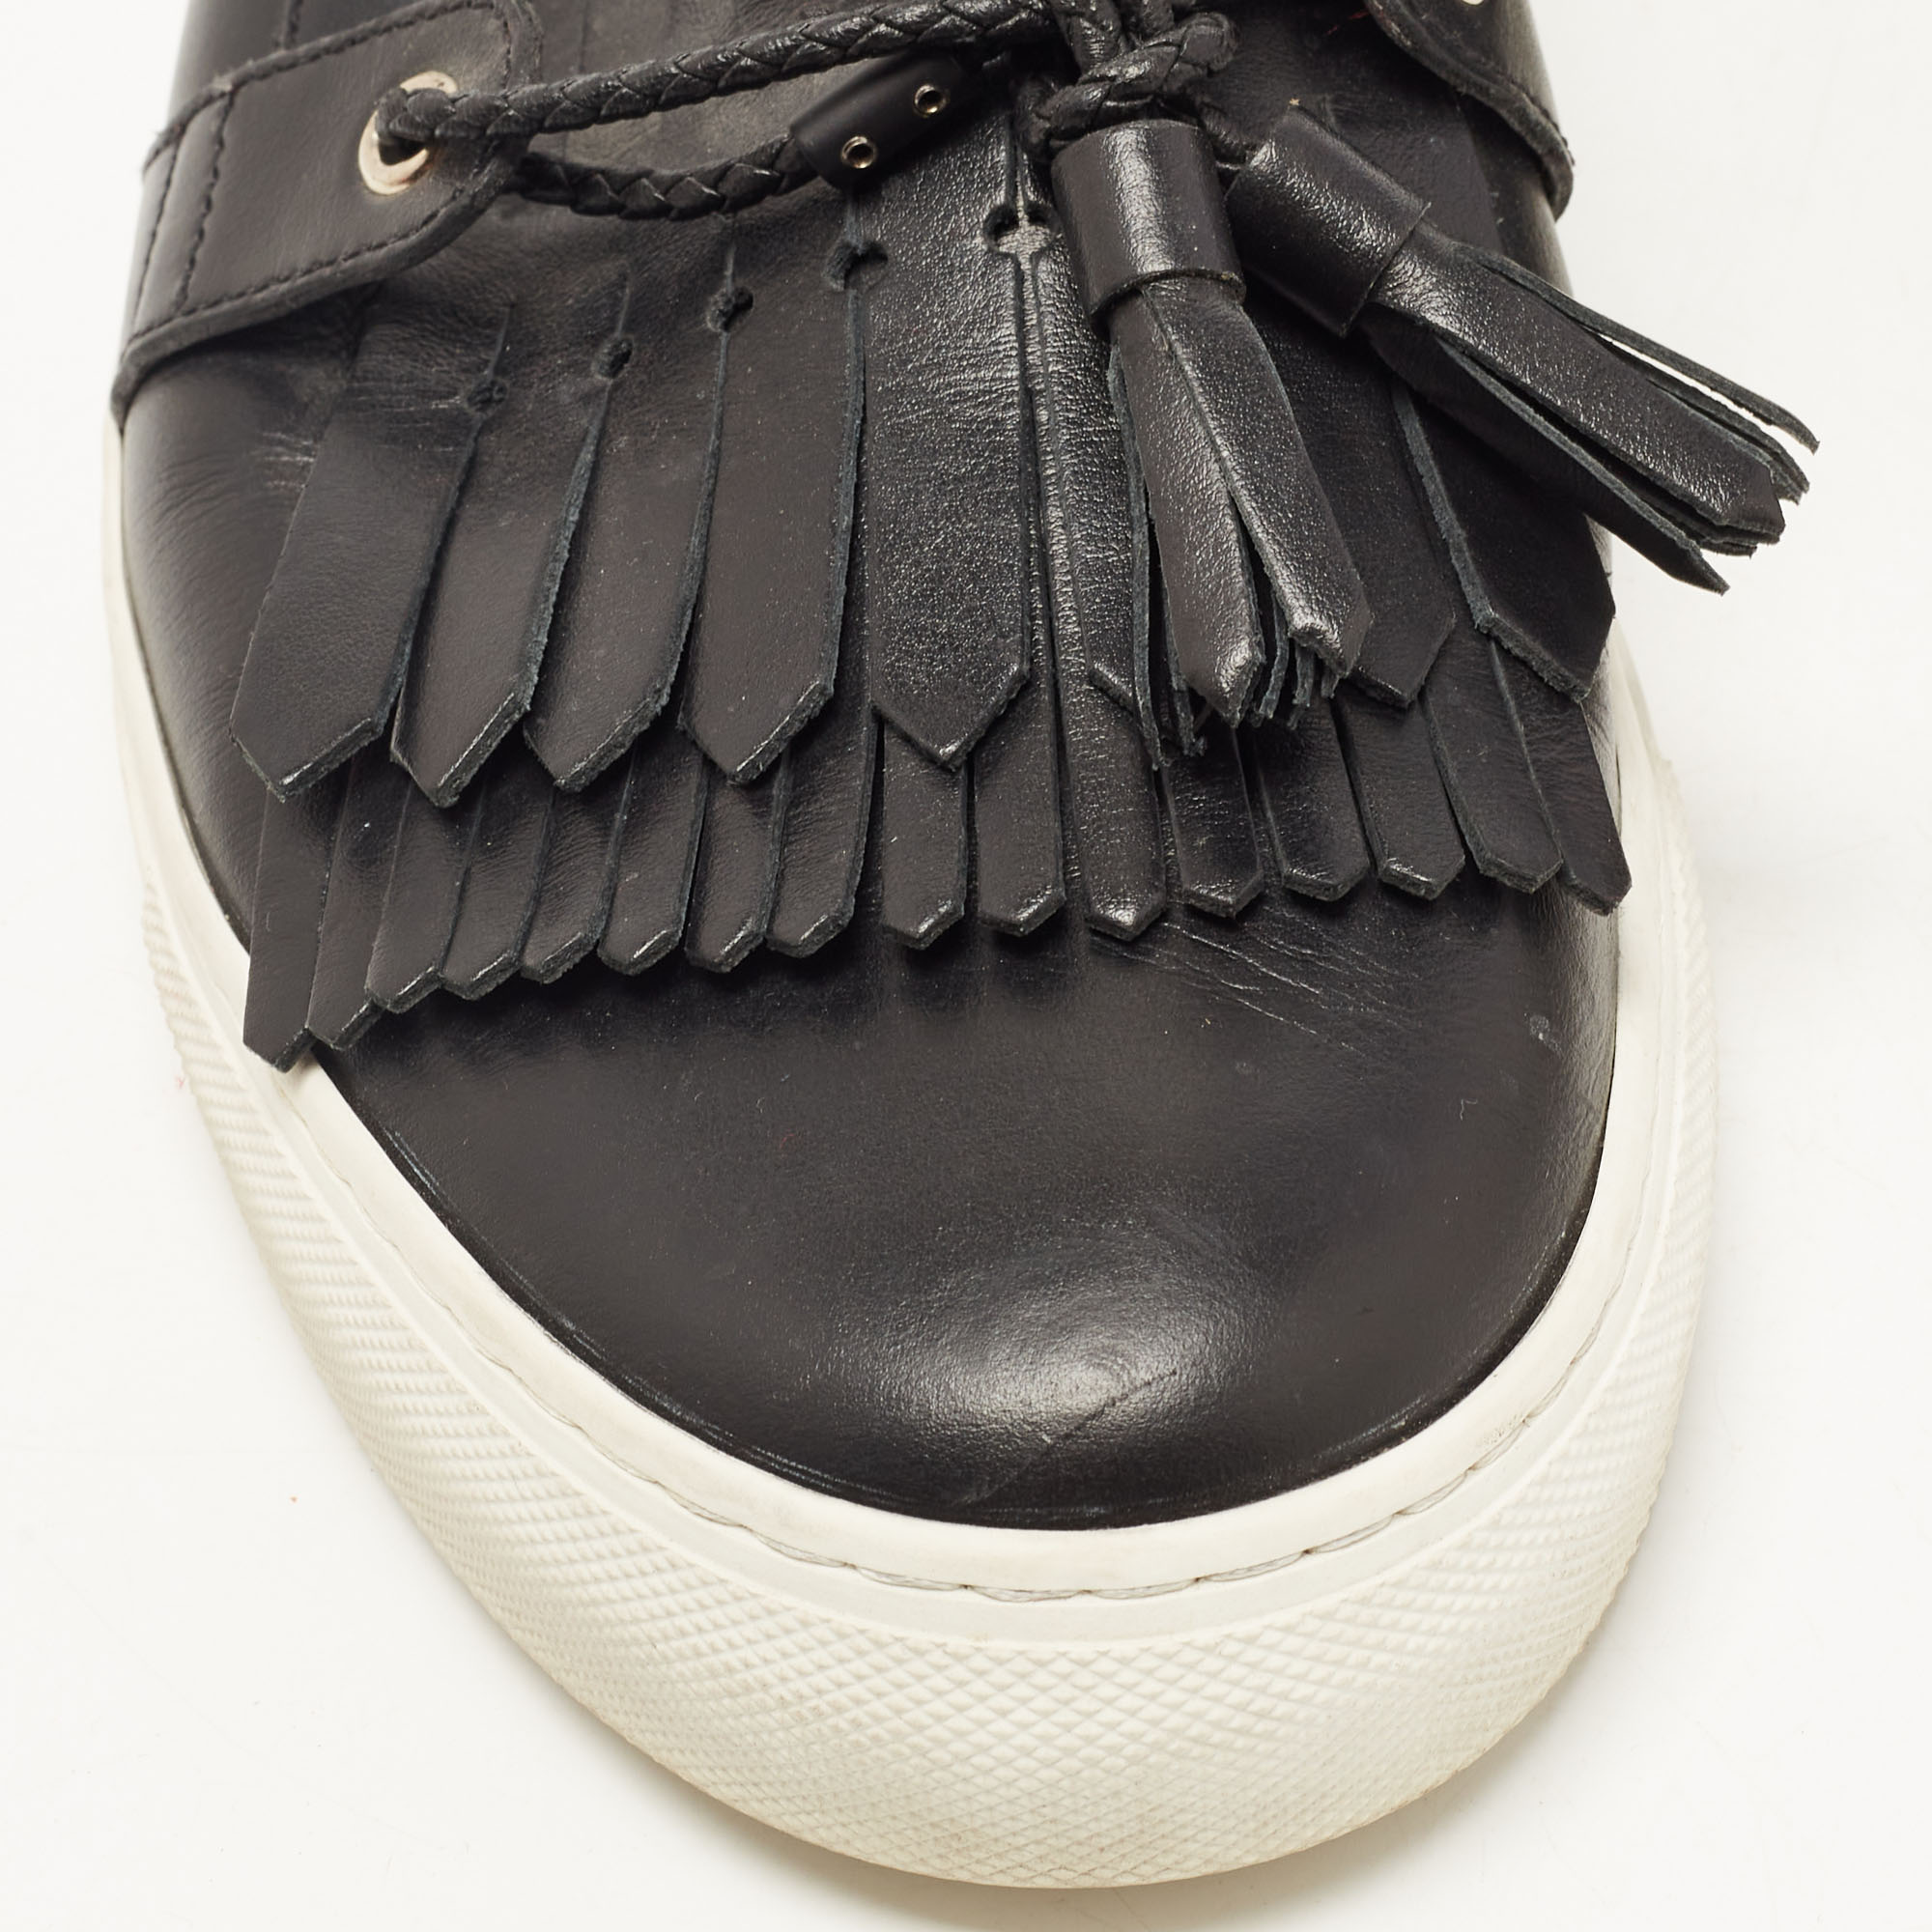 Dolce & Gabbana Black Leather Fringe Slip On Sneakers Size 41.5